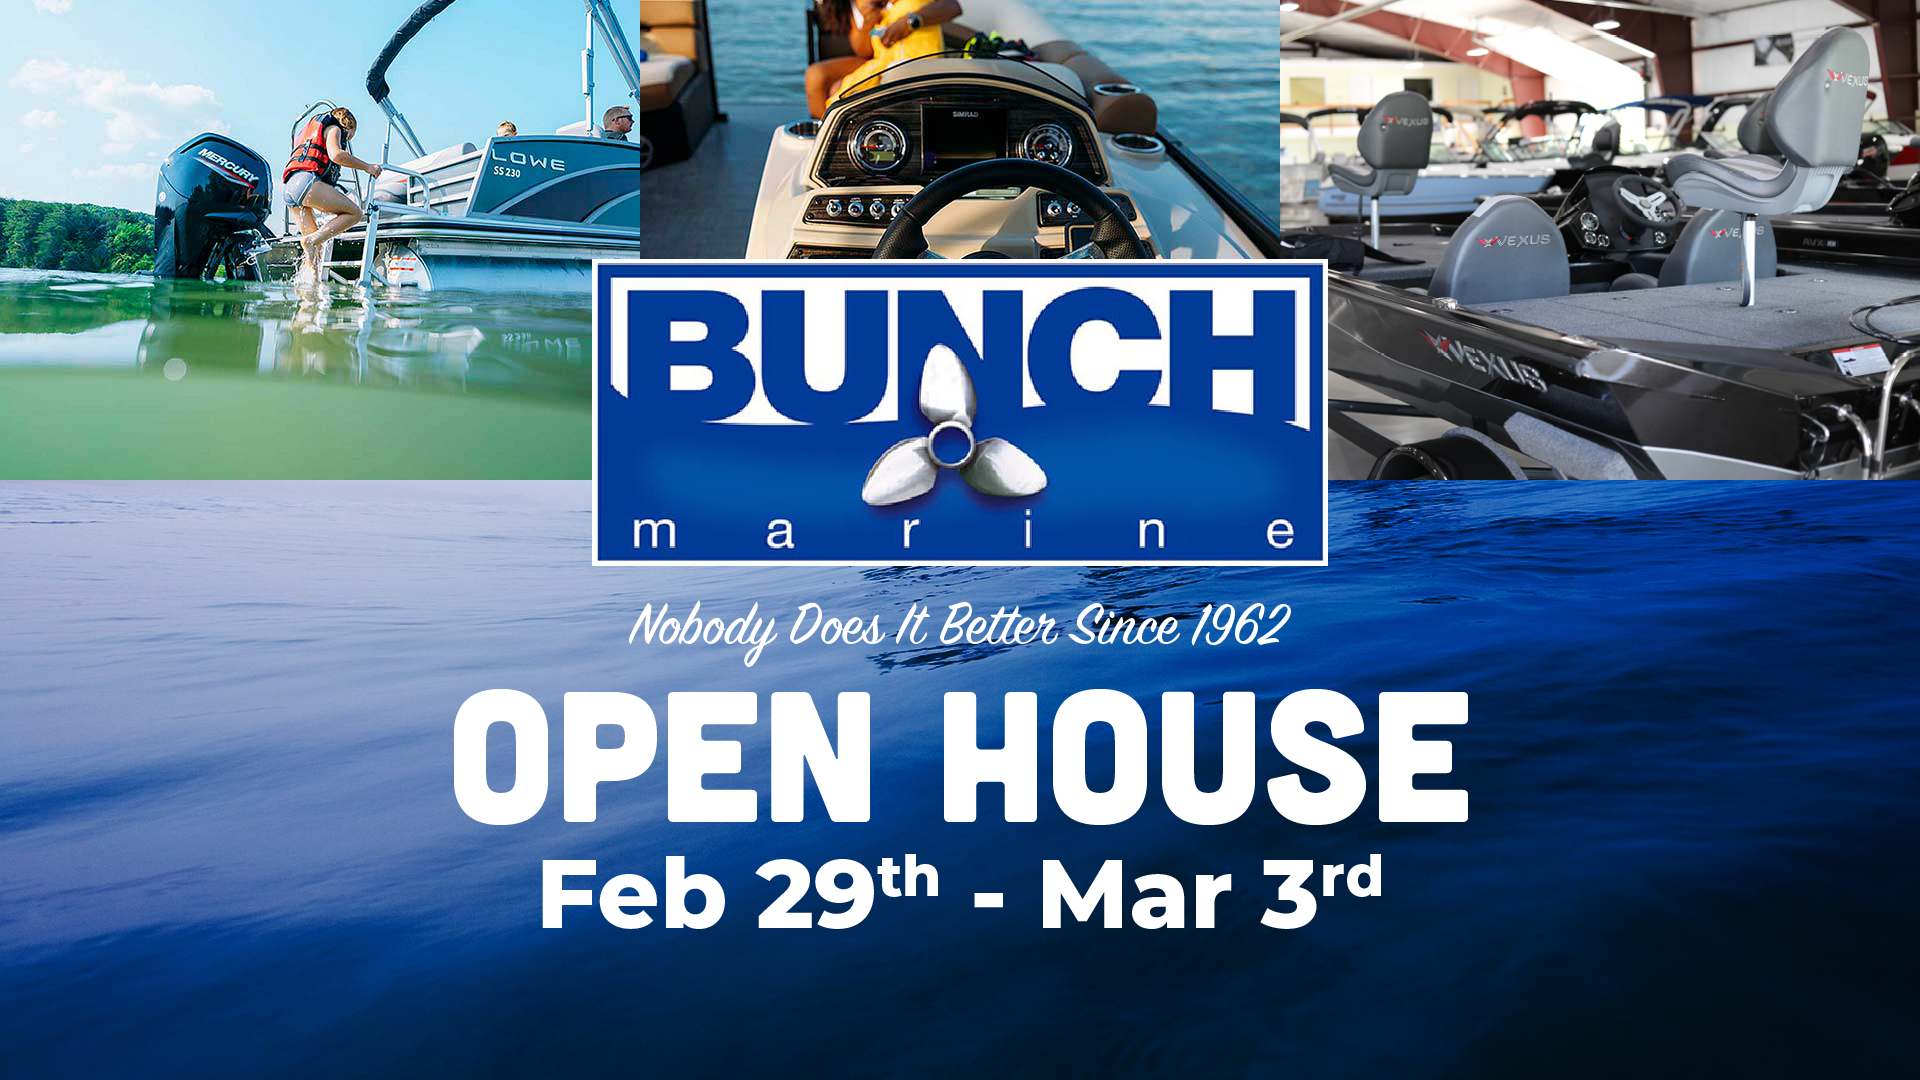 Bunch Marine Open House